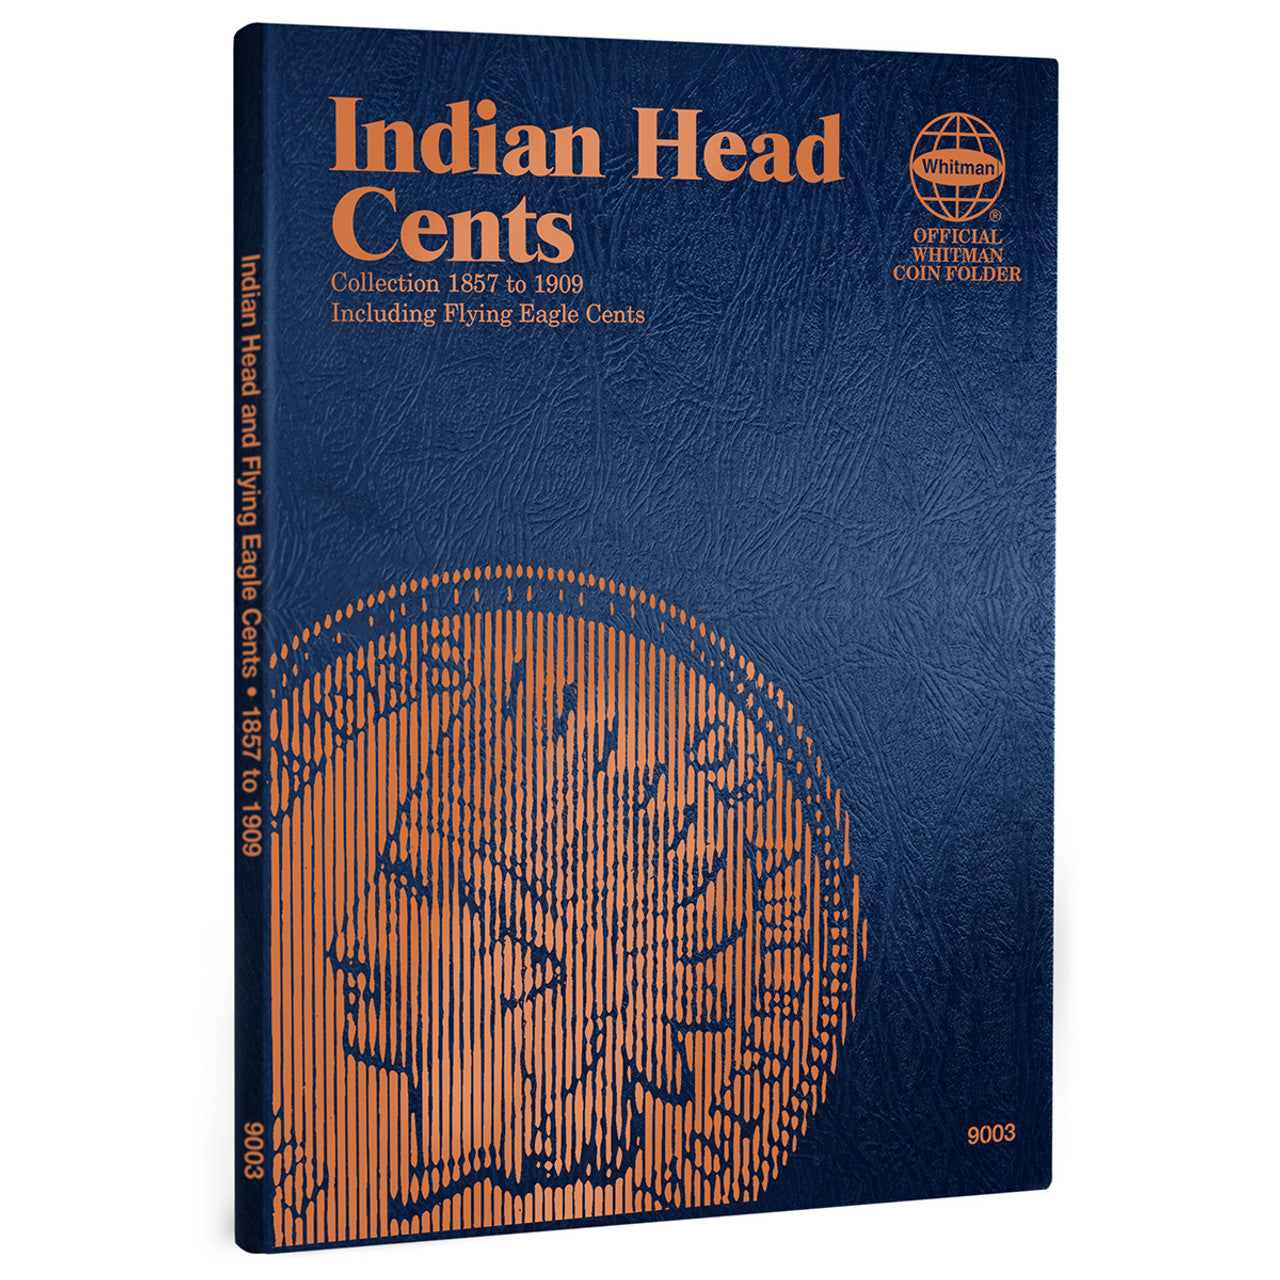 Whitman Coin Folder - Indian Cent 1857-1909